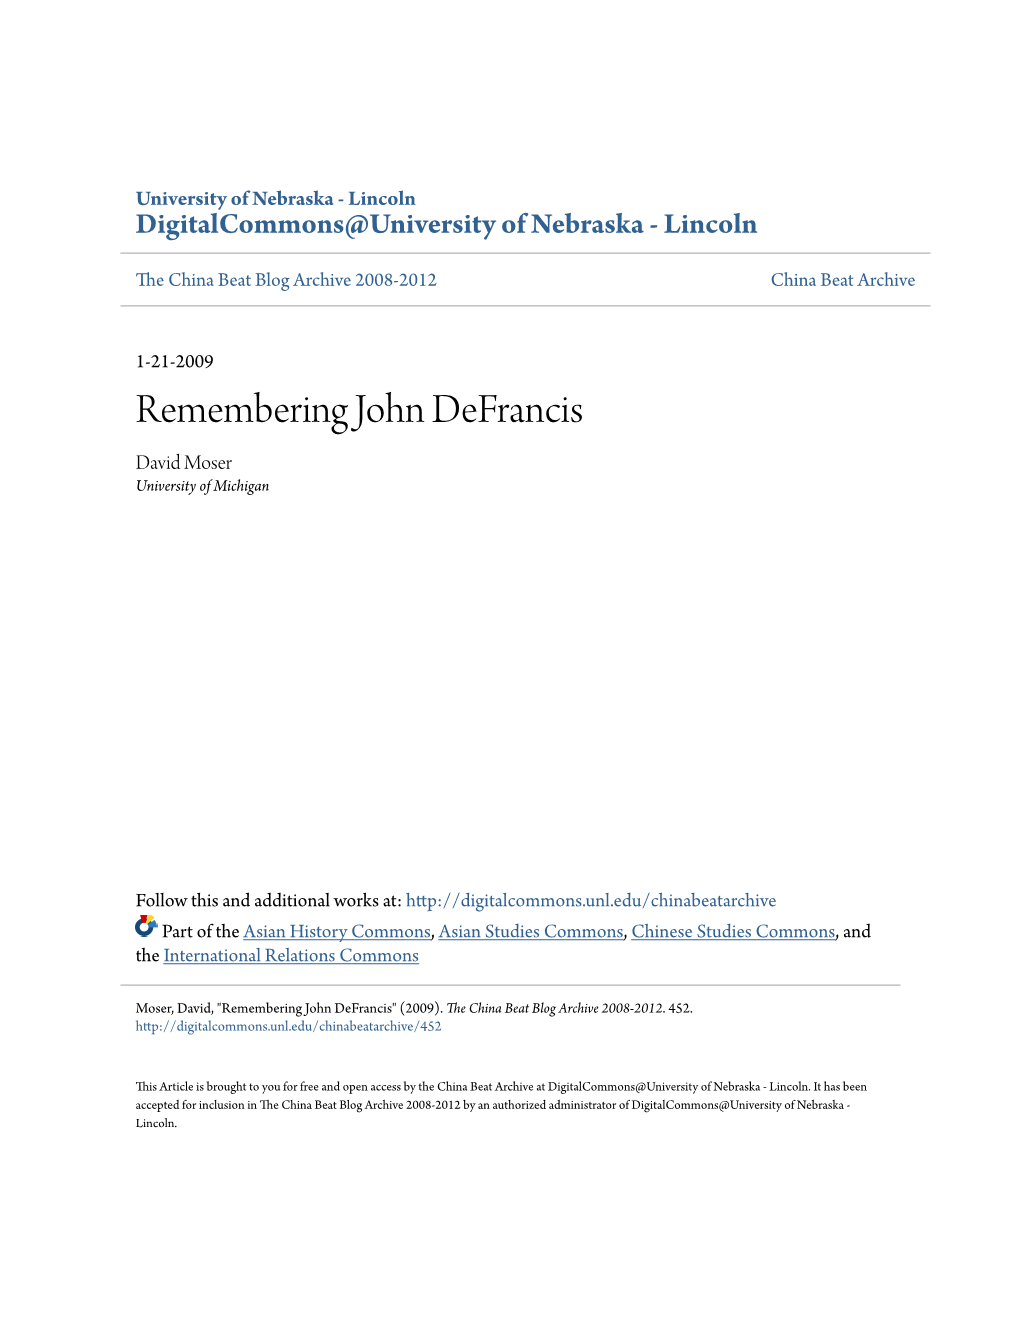 Remembering John Defrancis David Moser University of Michigan